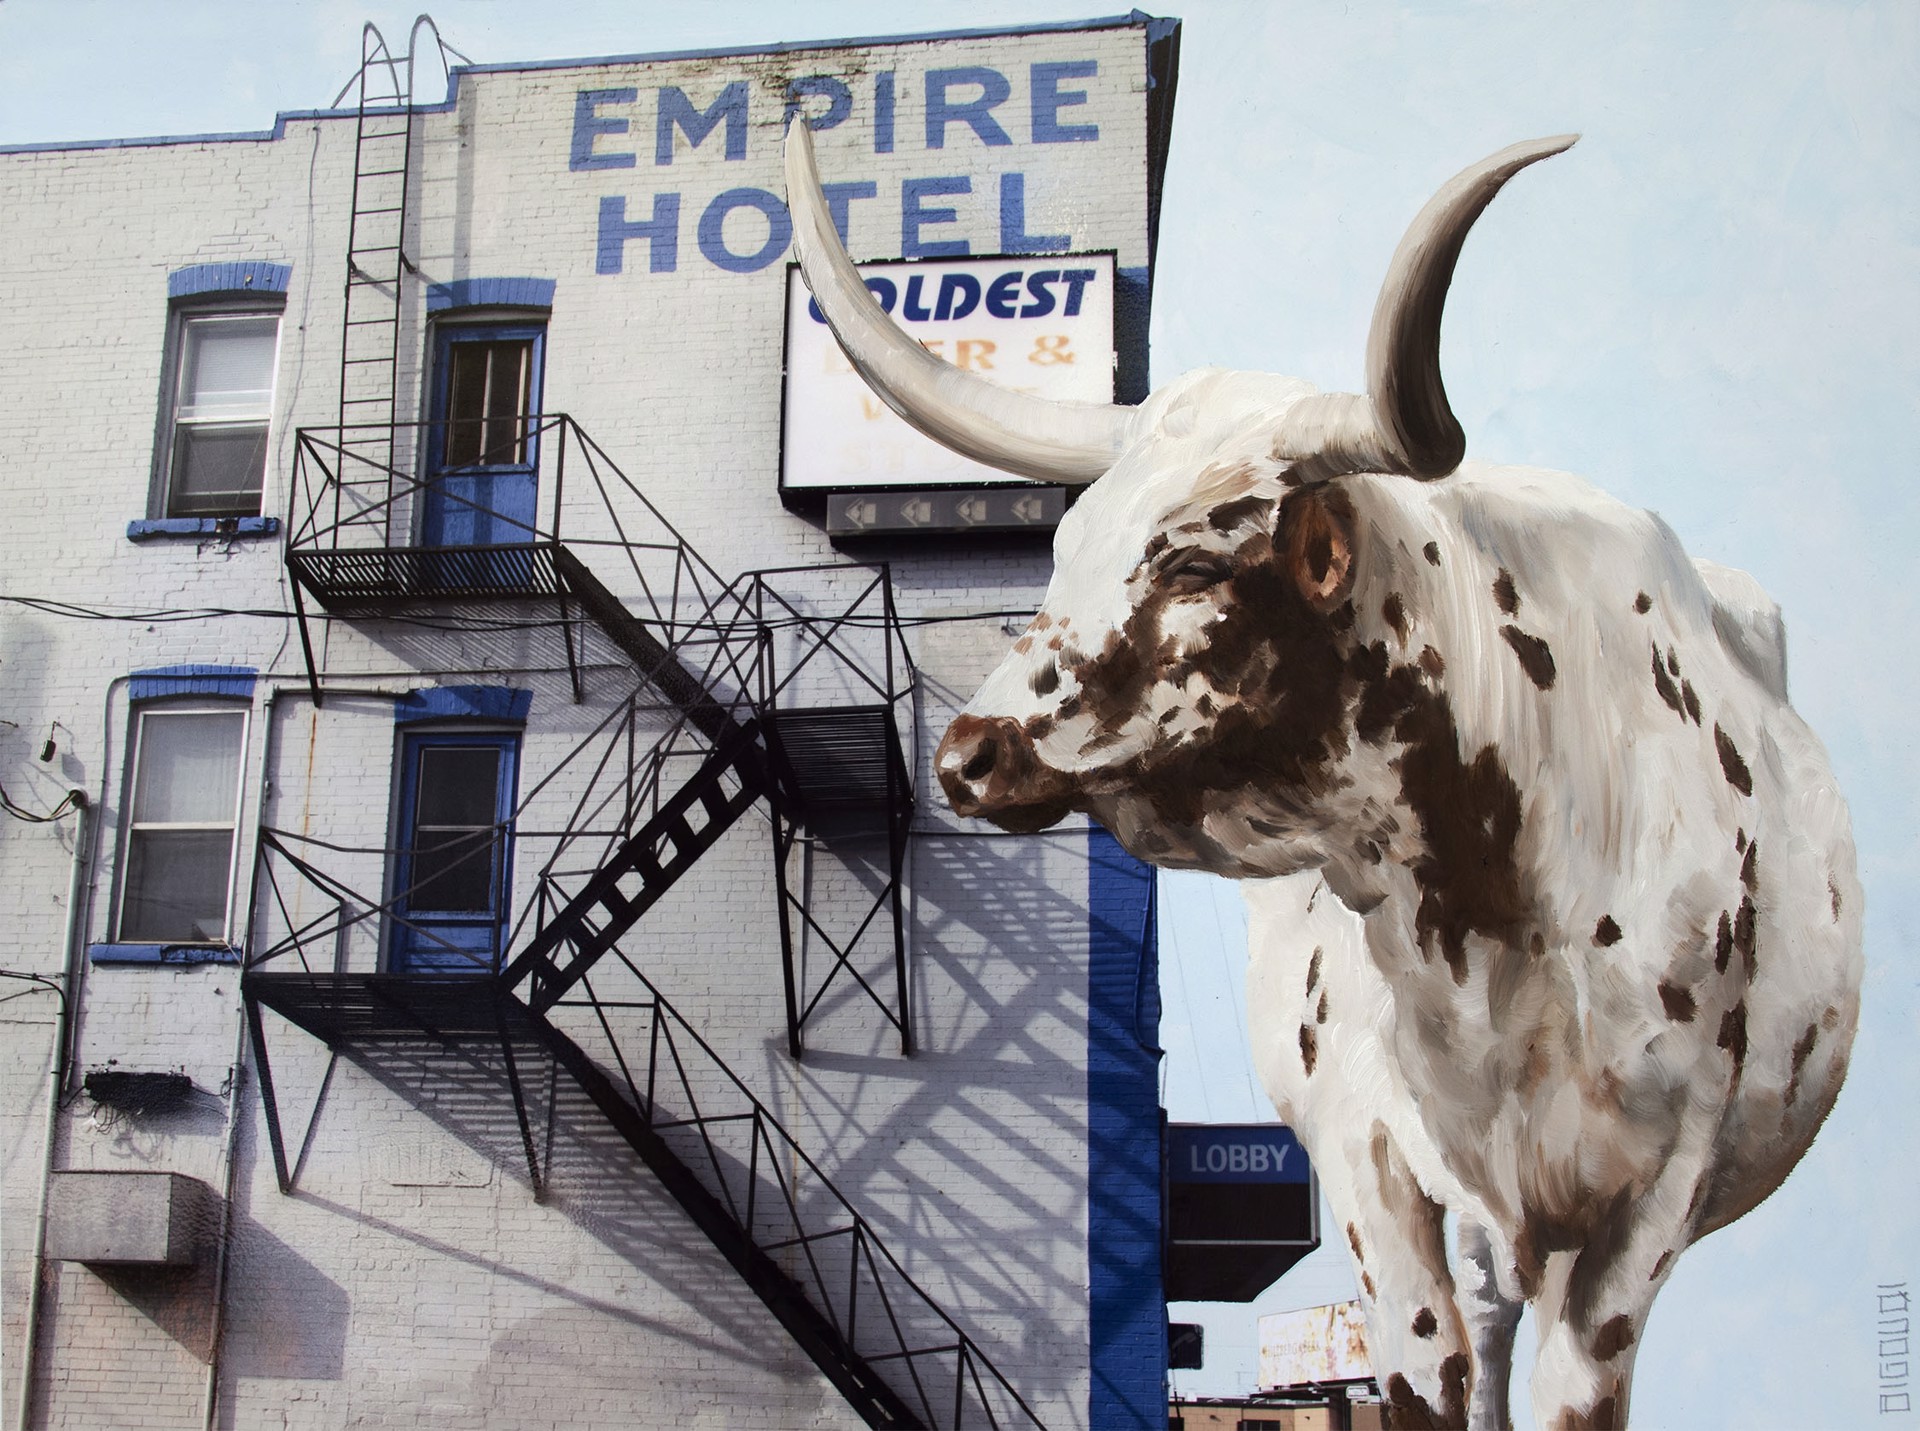 Regina Series, Empire Hotel by Bigoudi